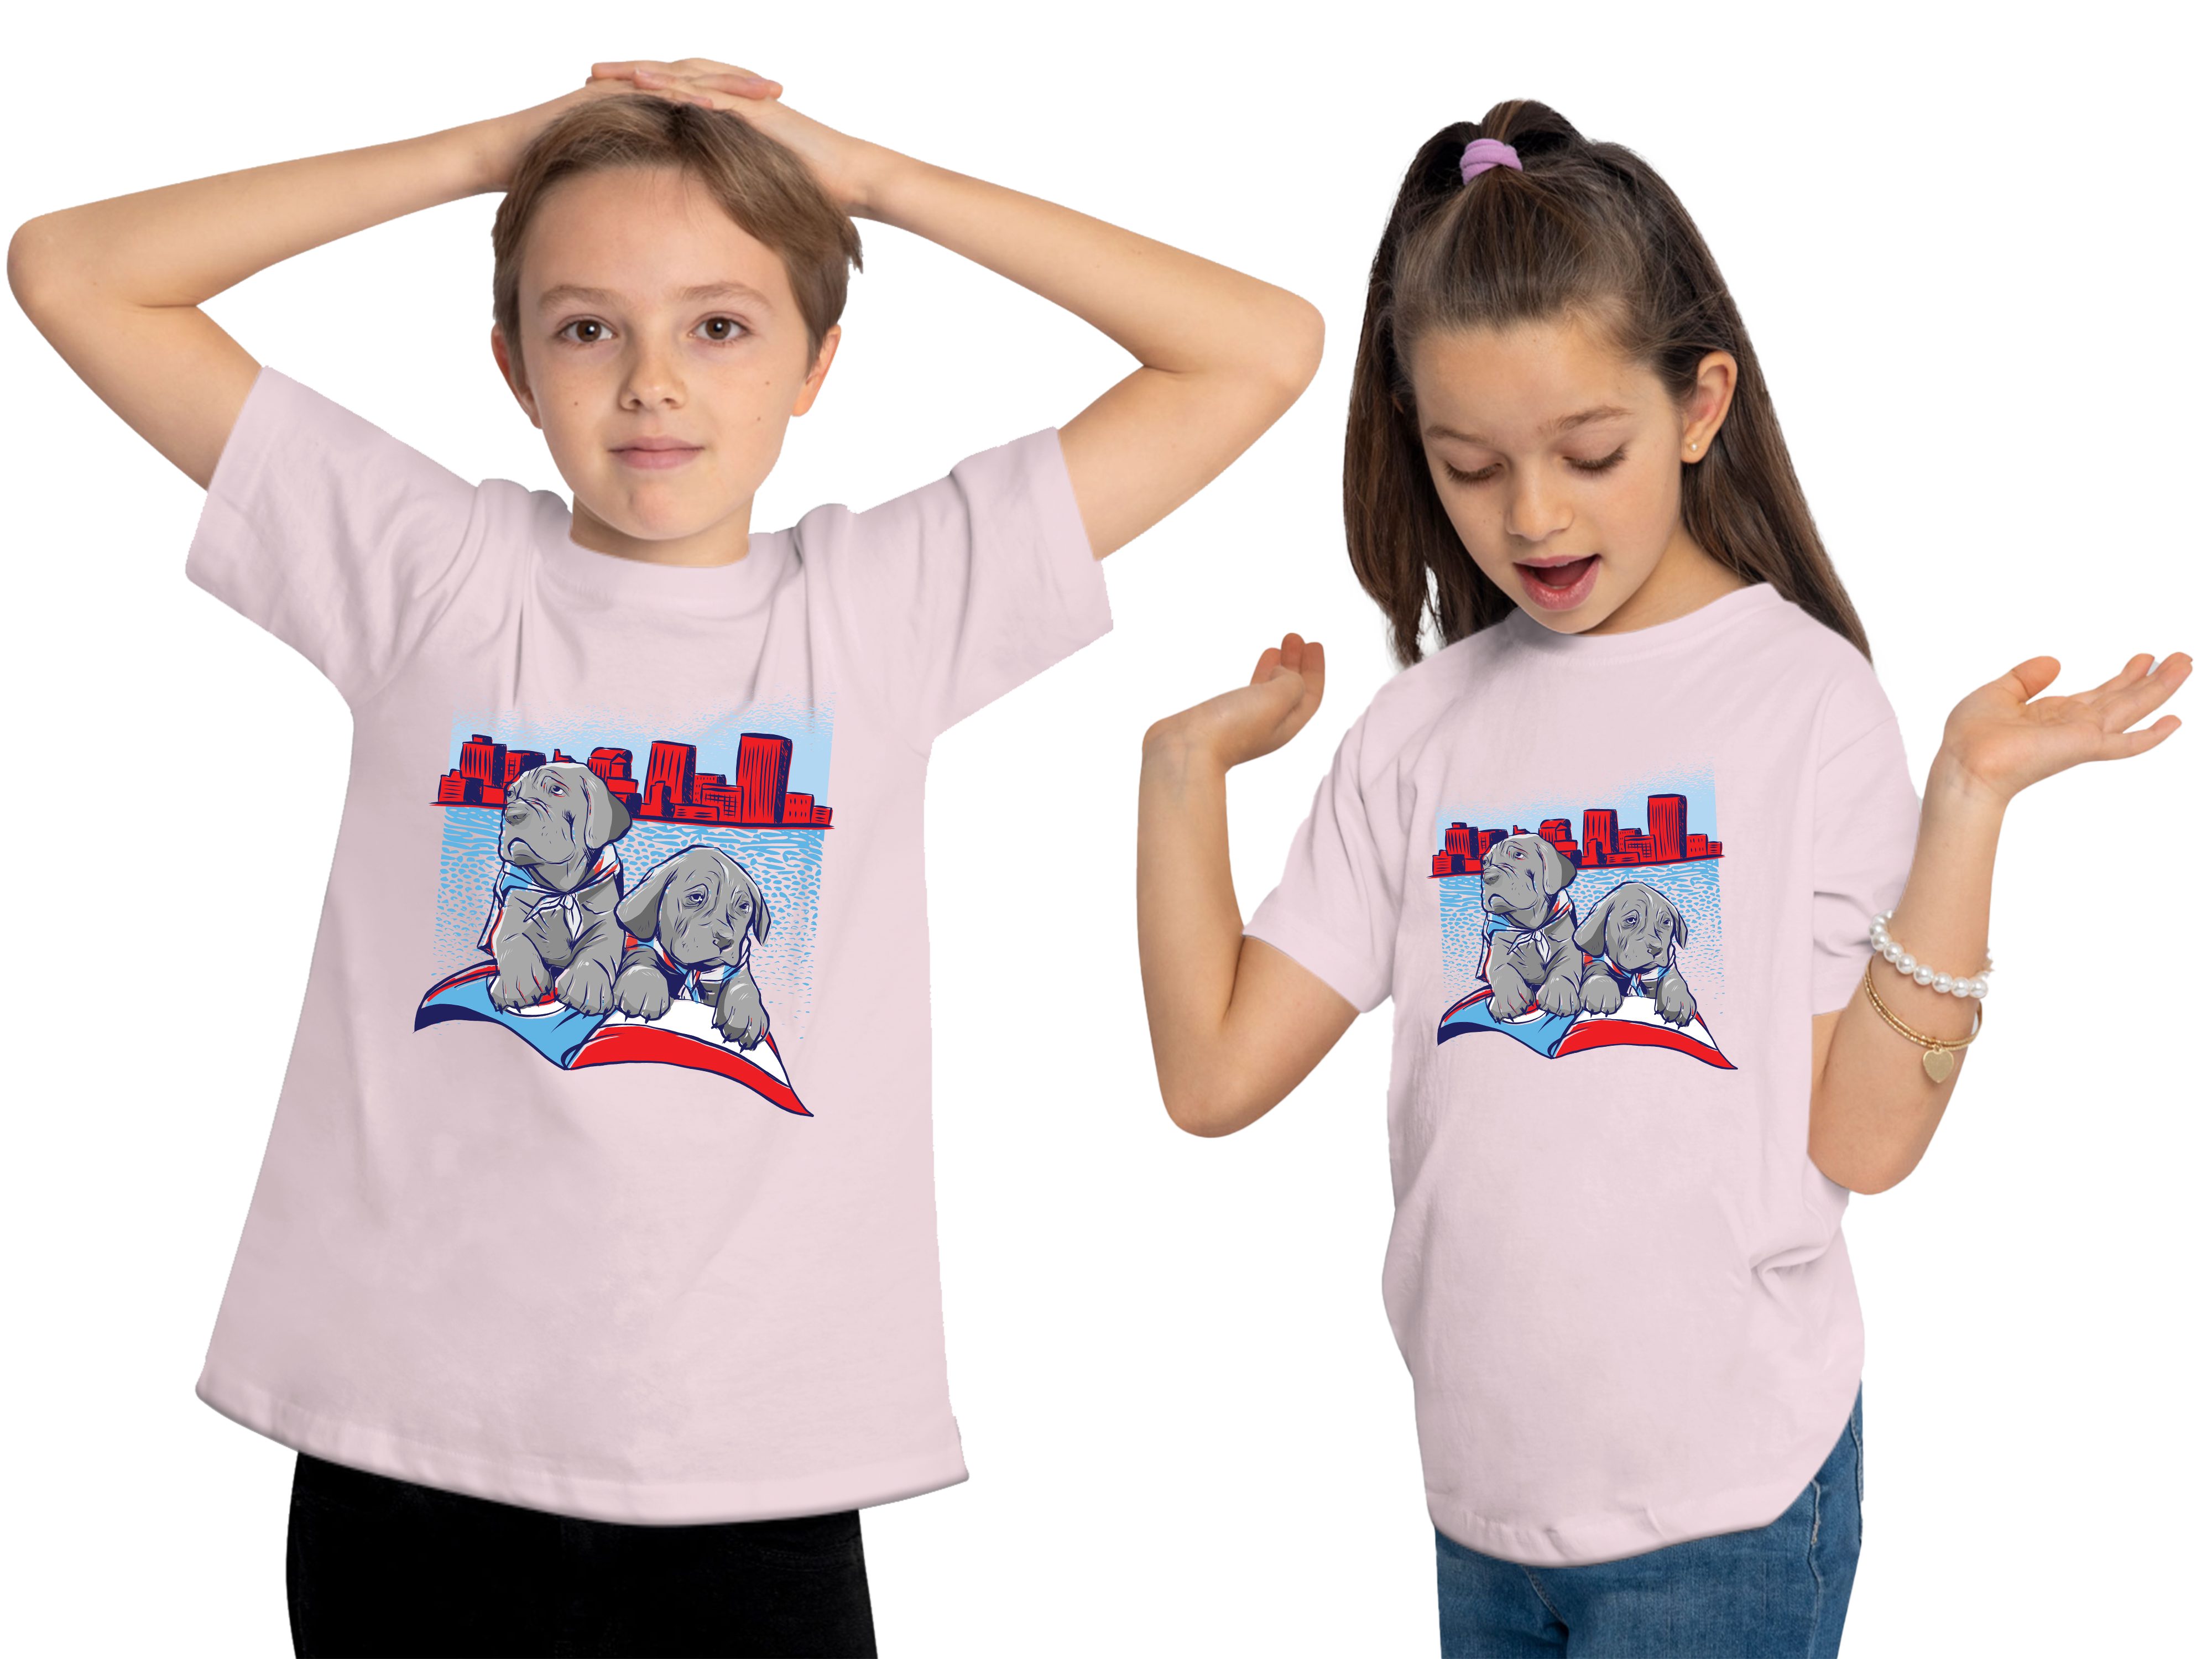 Baumwollshirt T-Shirt Hundewelpen bedruckt 2 Aufdruck, süße mit rosa i231 - Hunde MyDesign24 Print-Shirt Kinder